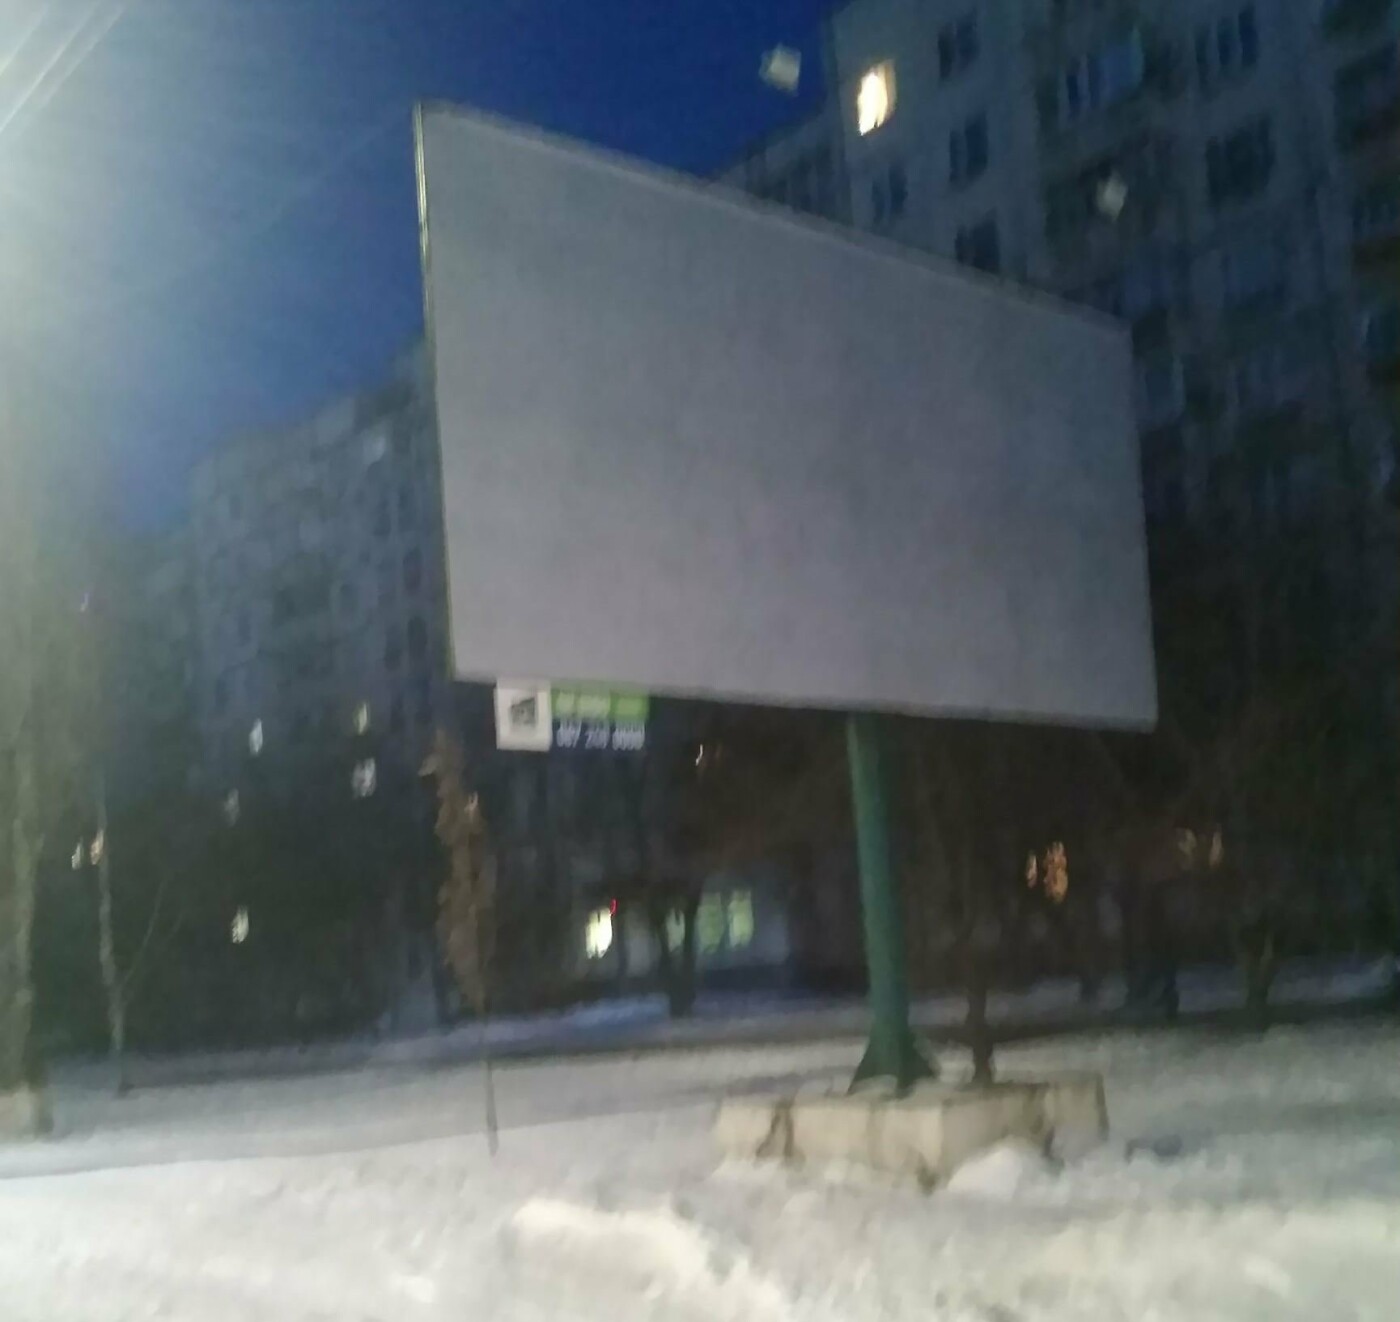 билборд